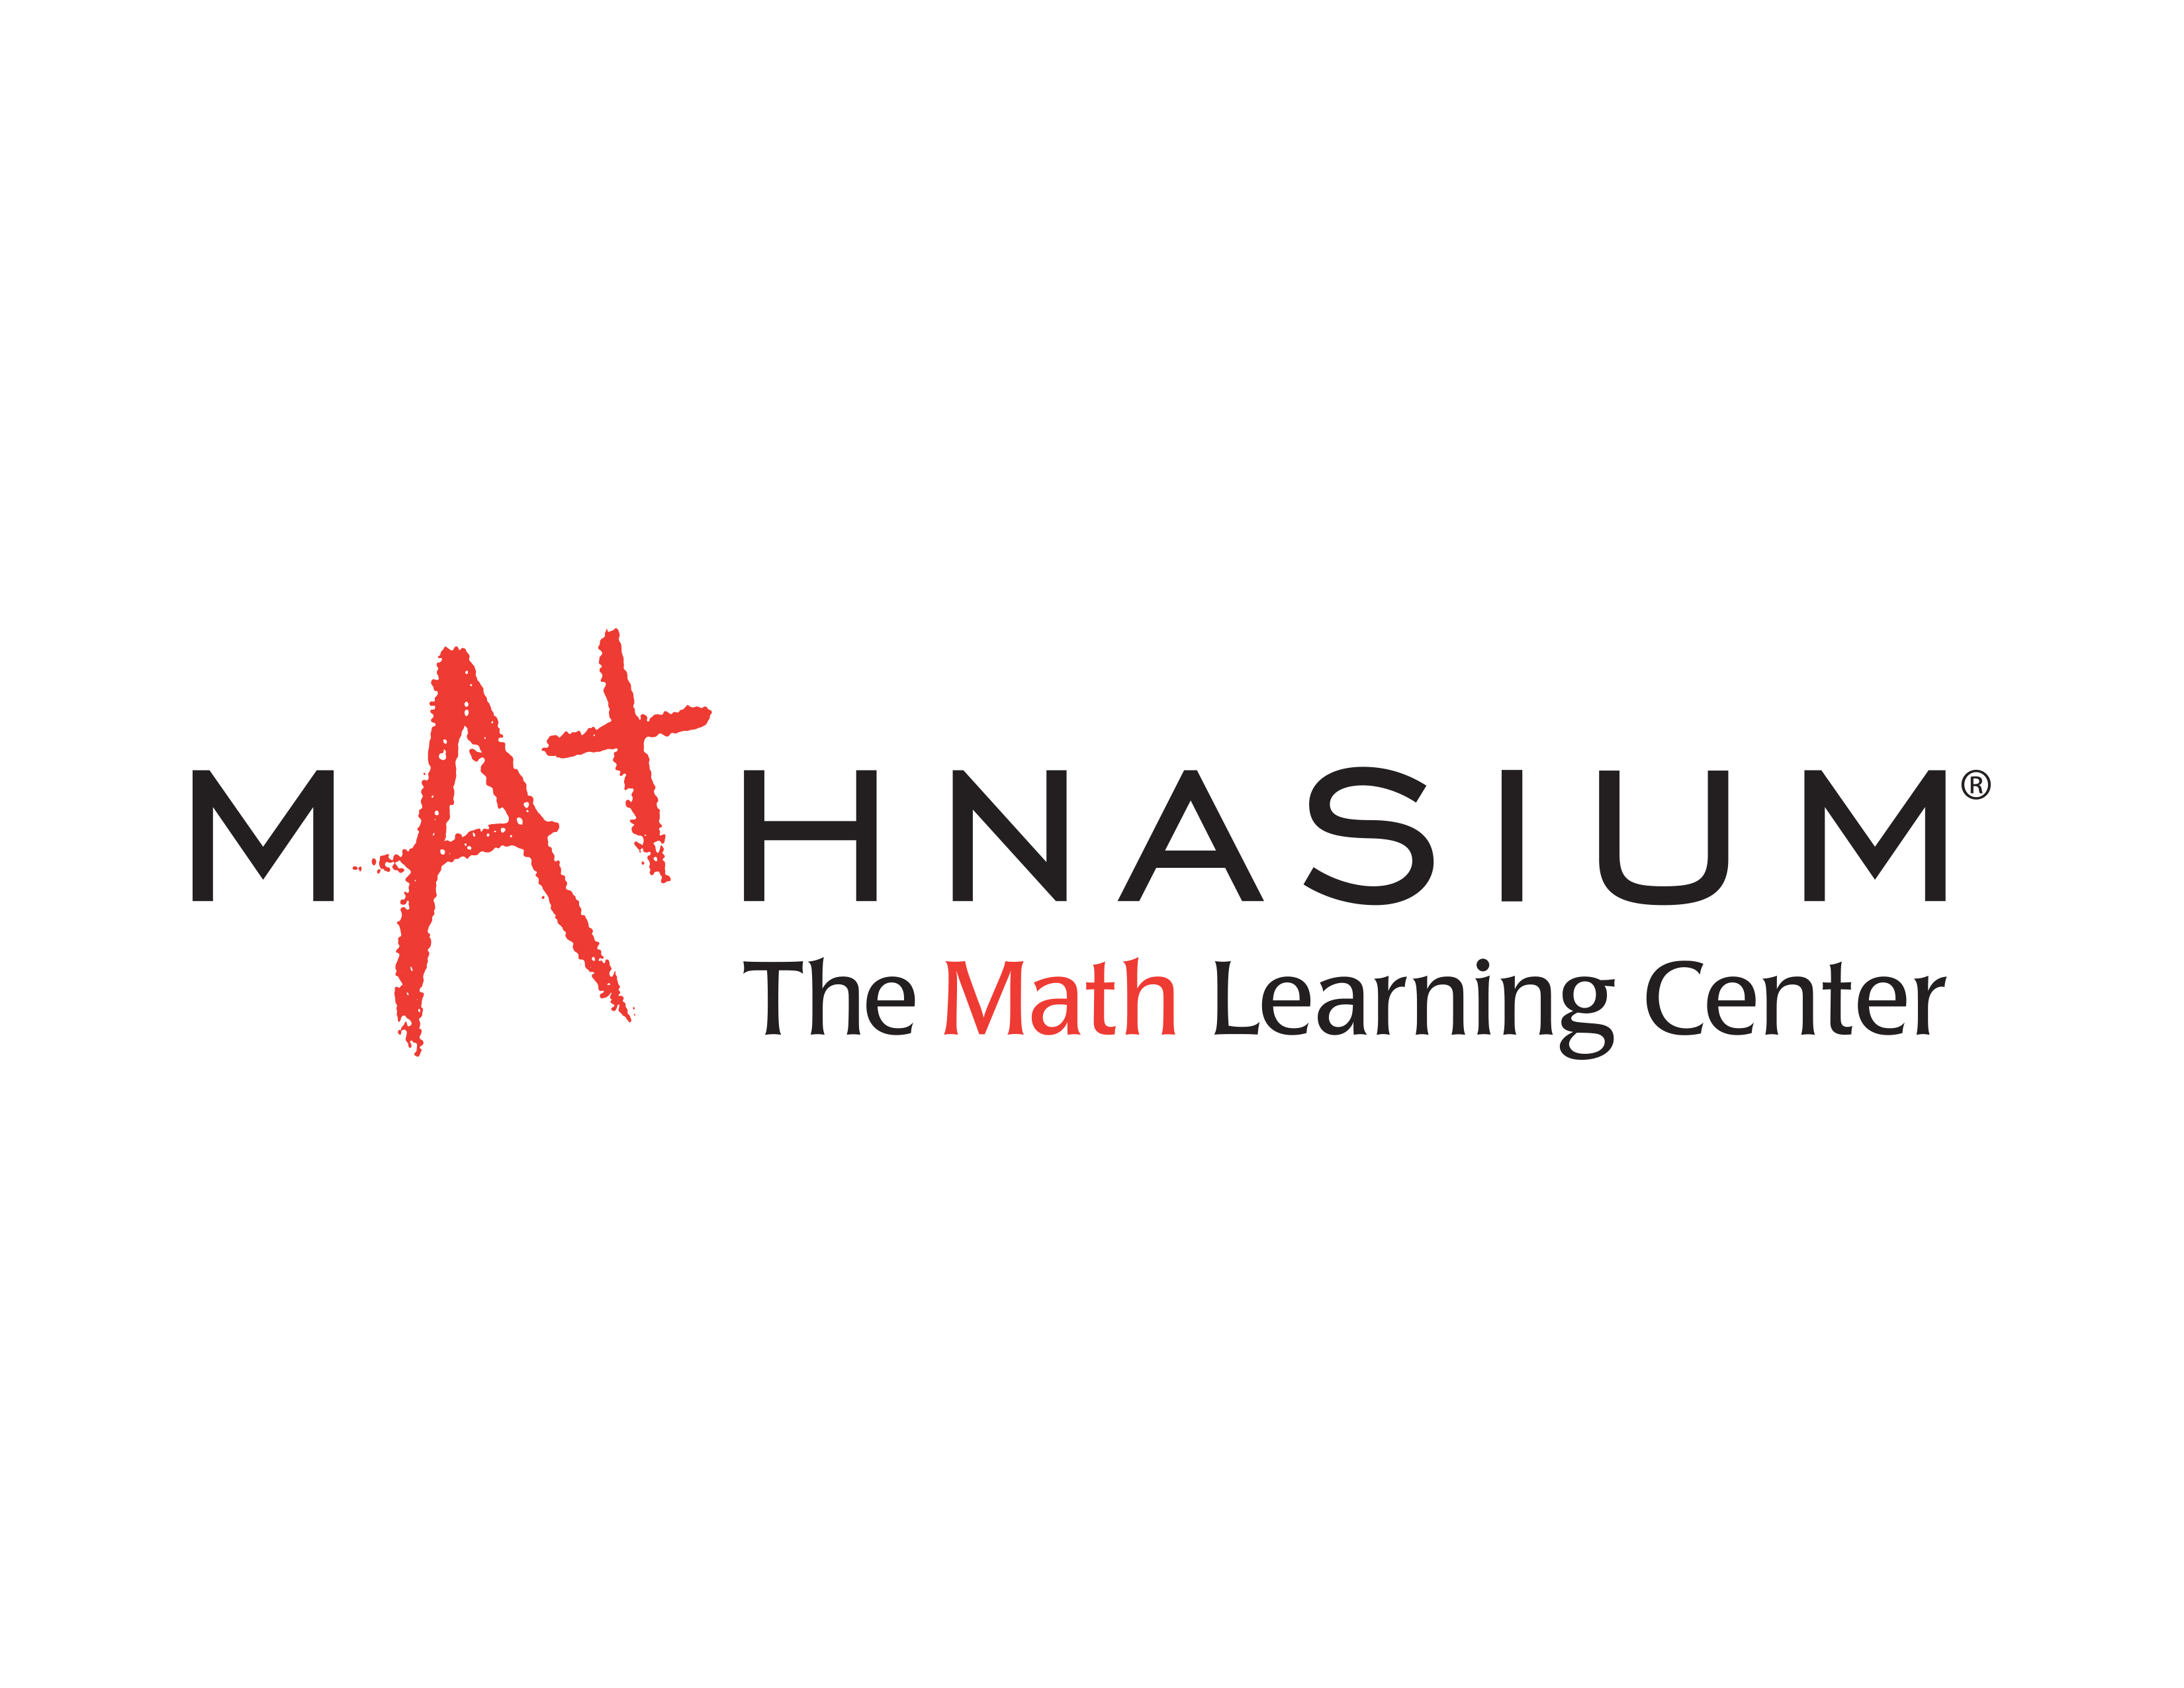 MATHNASIUM: The Math Learning Center